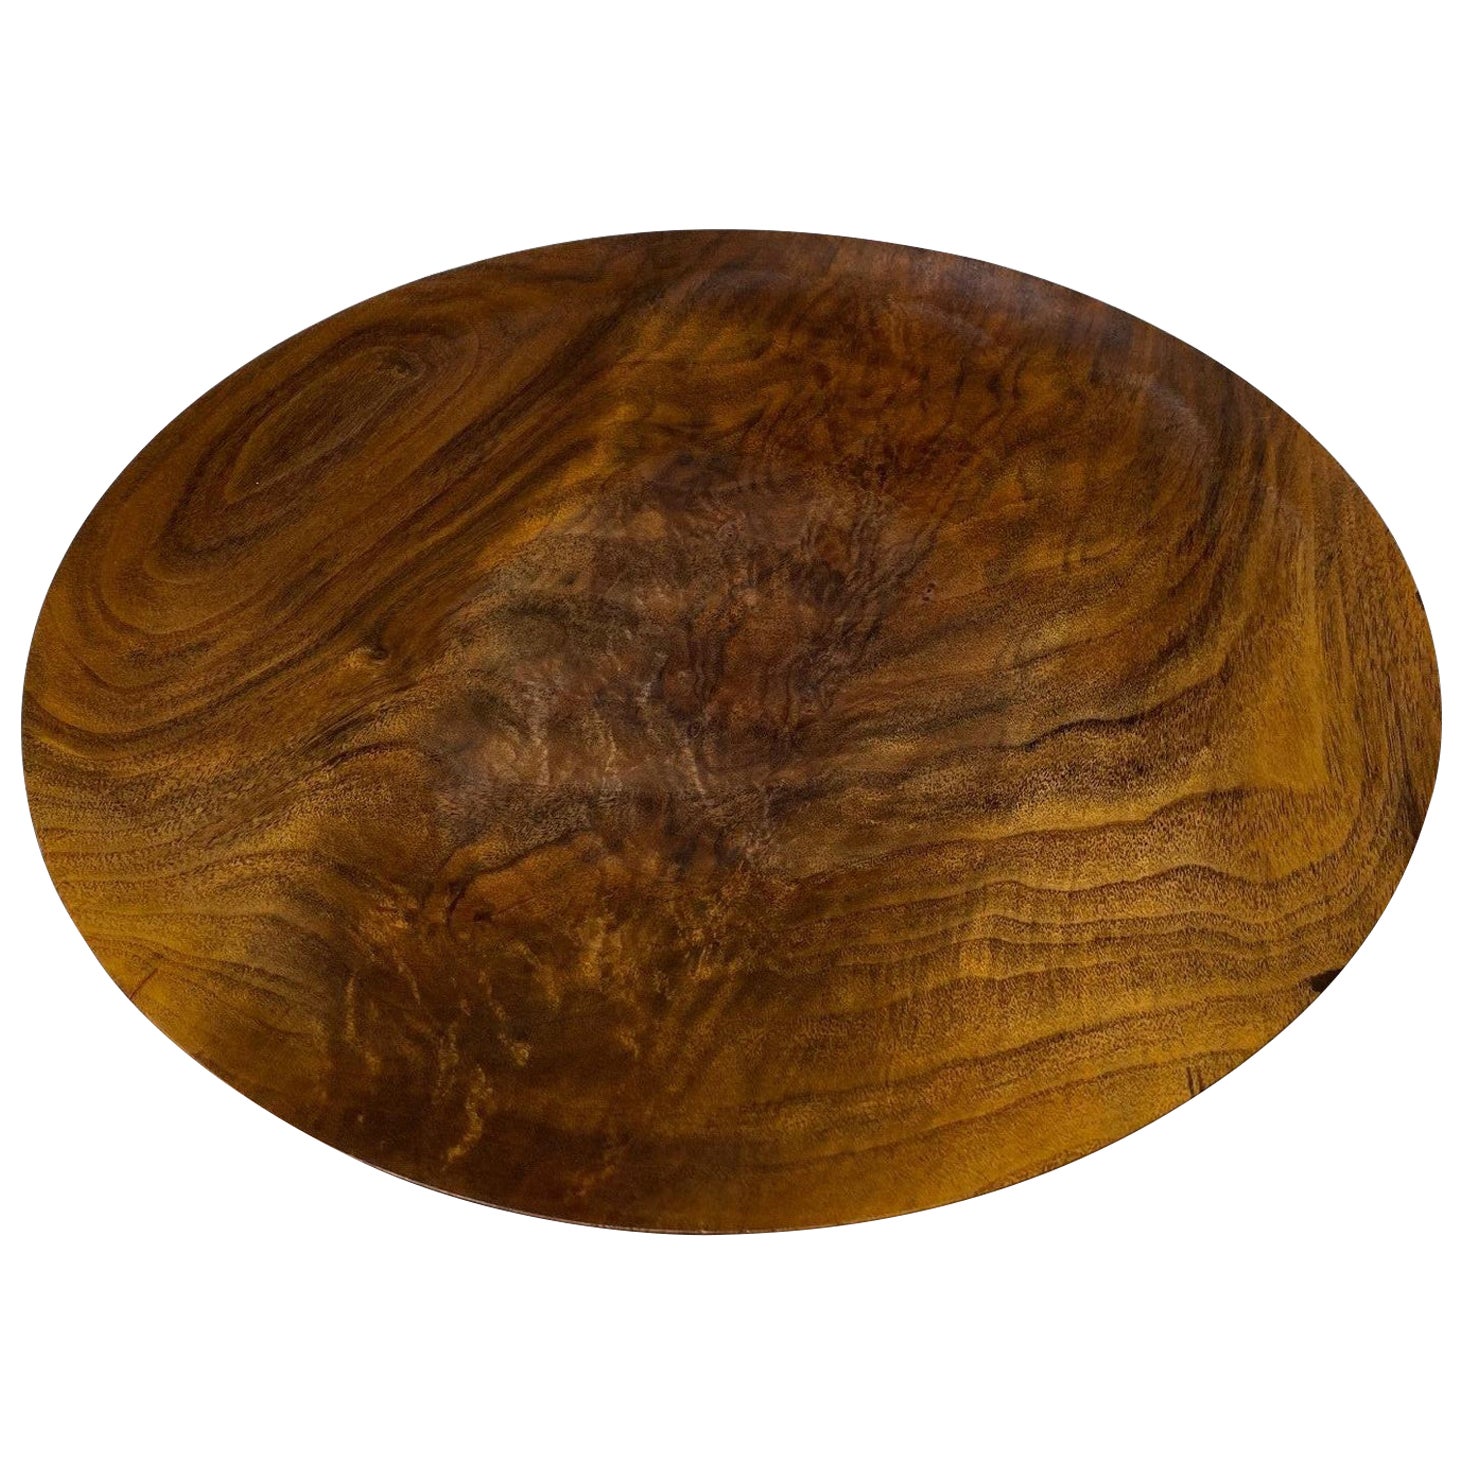 Bob Stocksdale Signed Mid-Century Modern Turned Walnut Wood Charger Platter